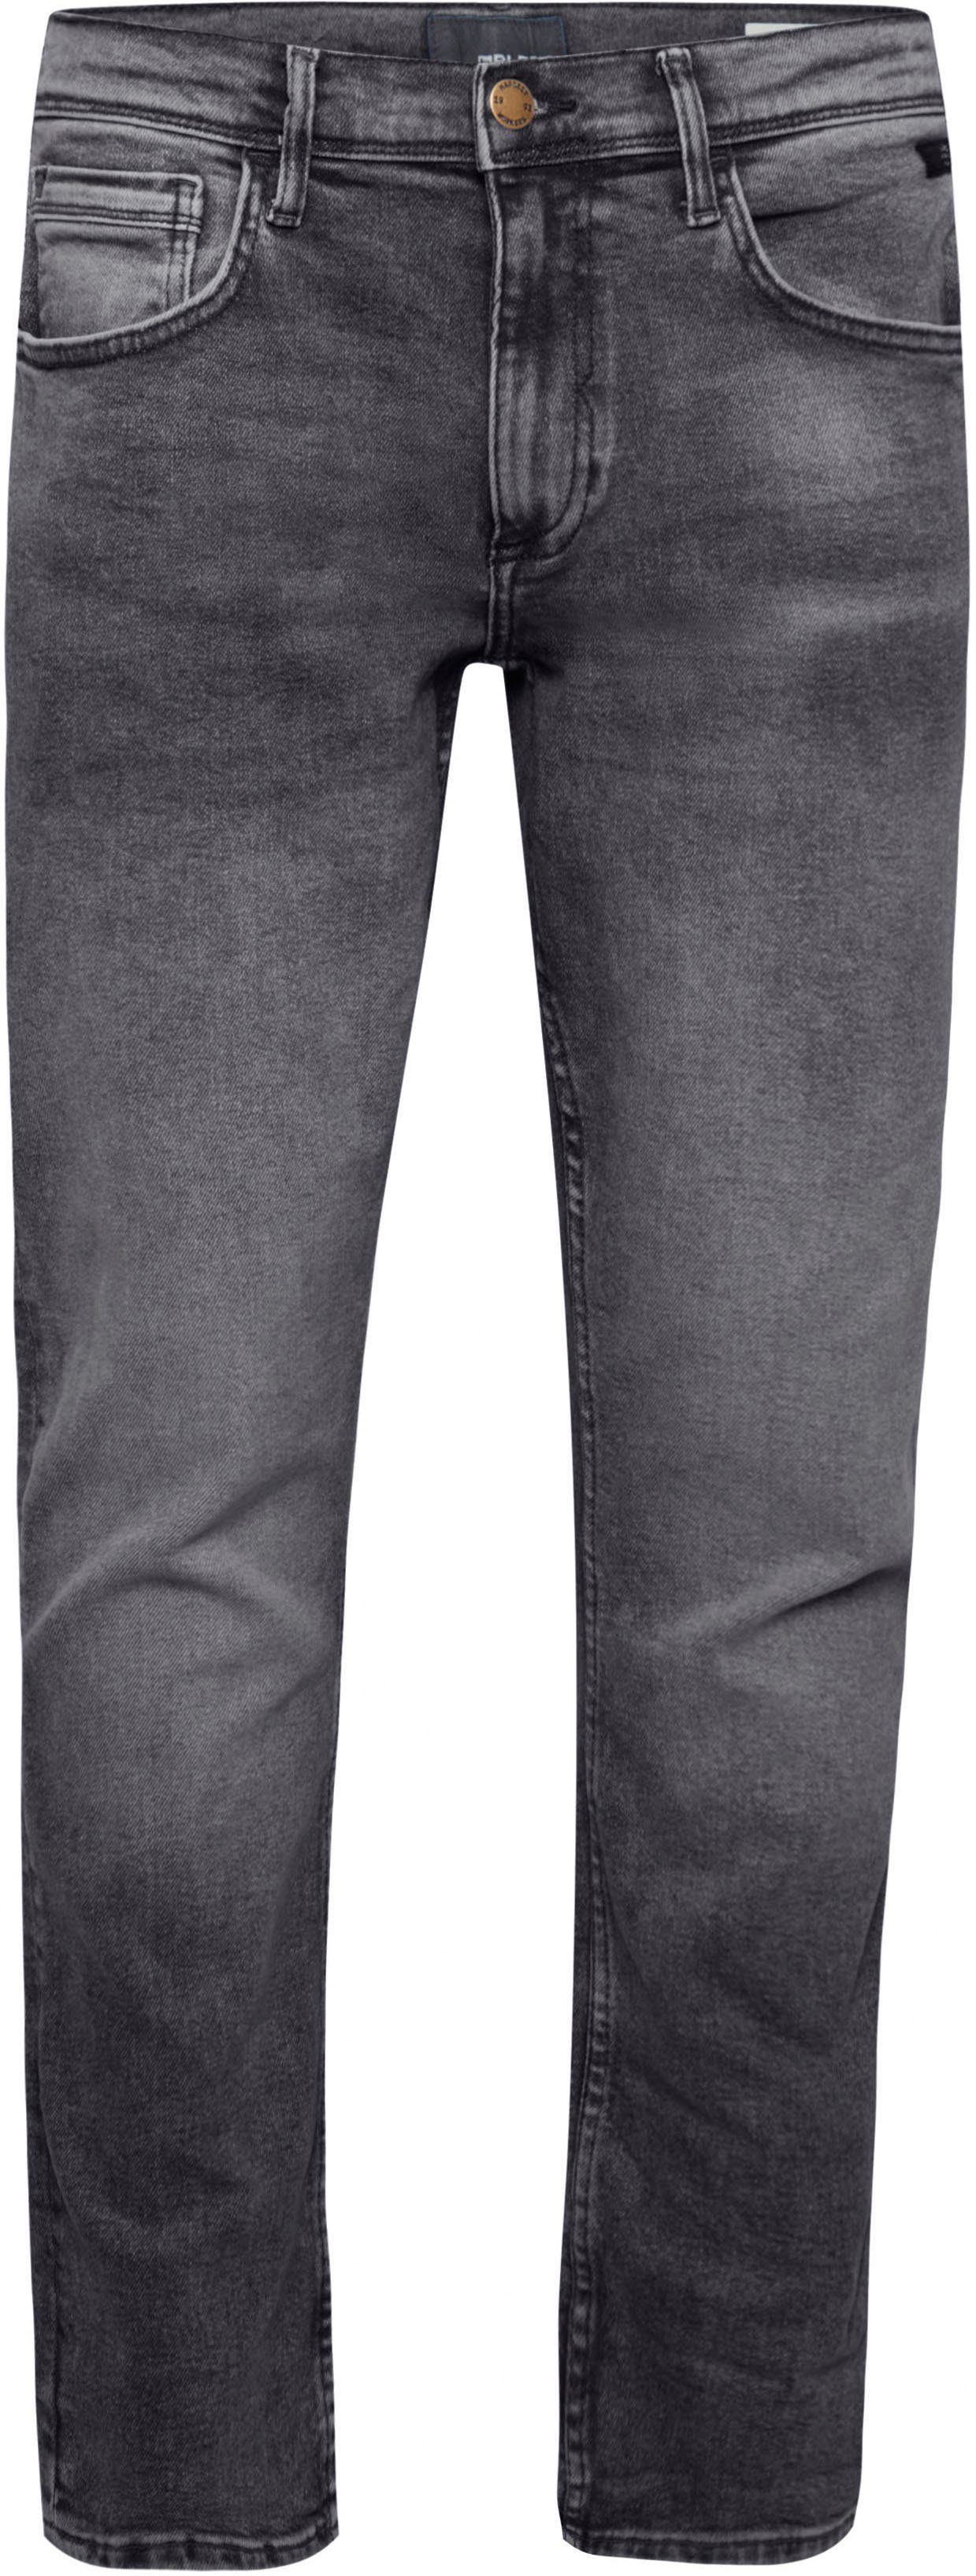 grey 5-Pocket-Jeans BL Blend Blizzard Jeans Multiflex